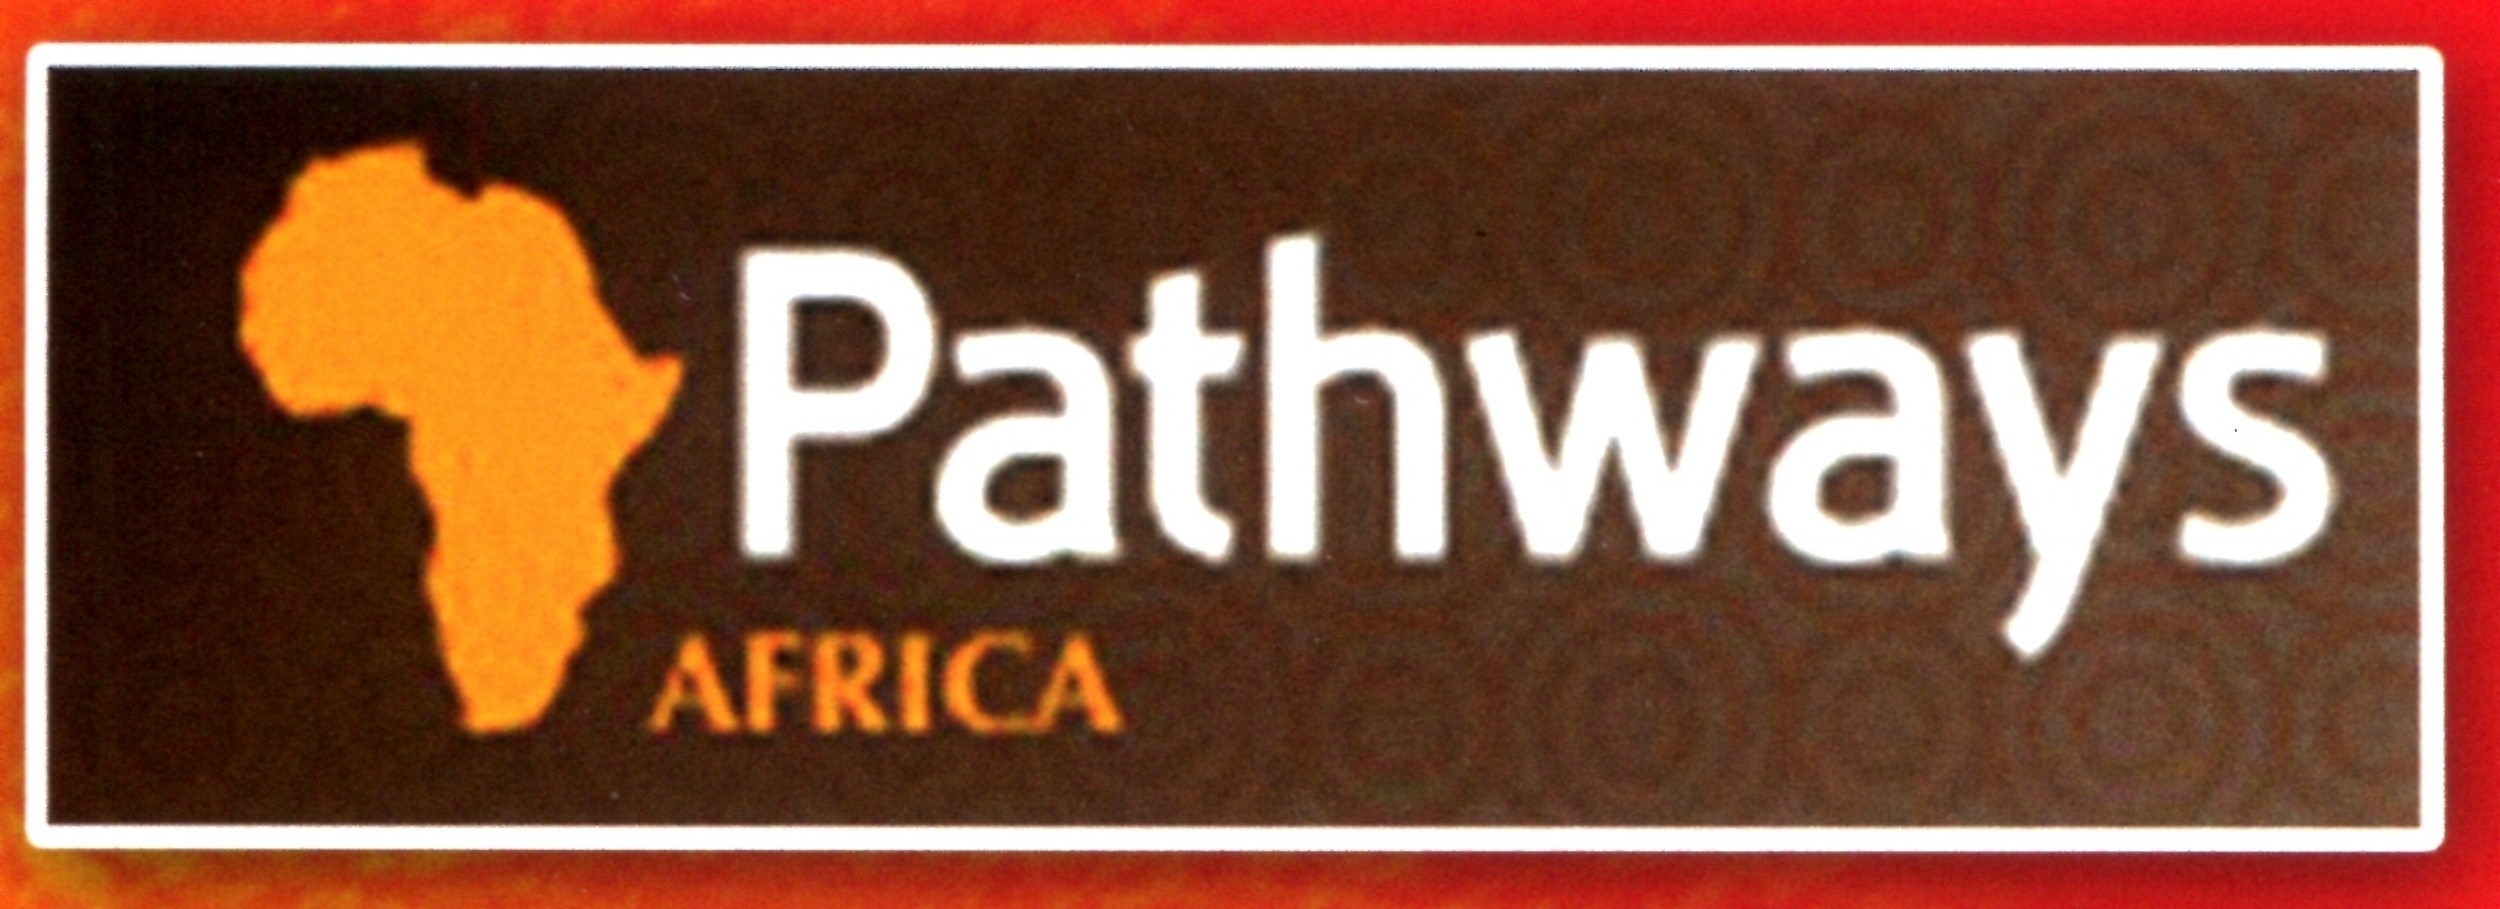 Pathways/Africa